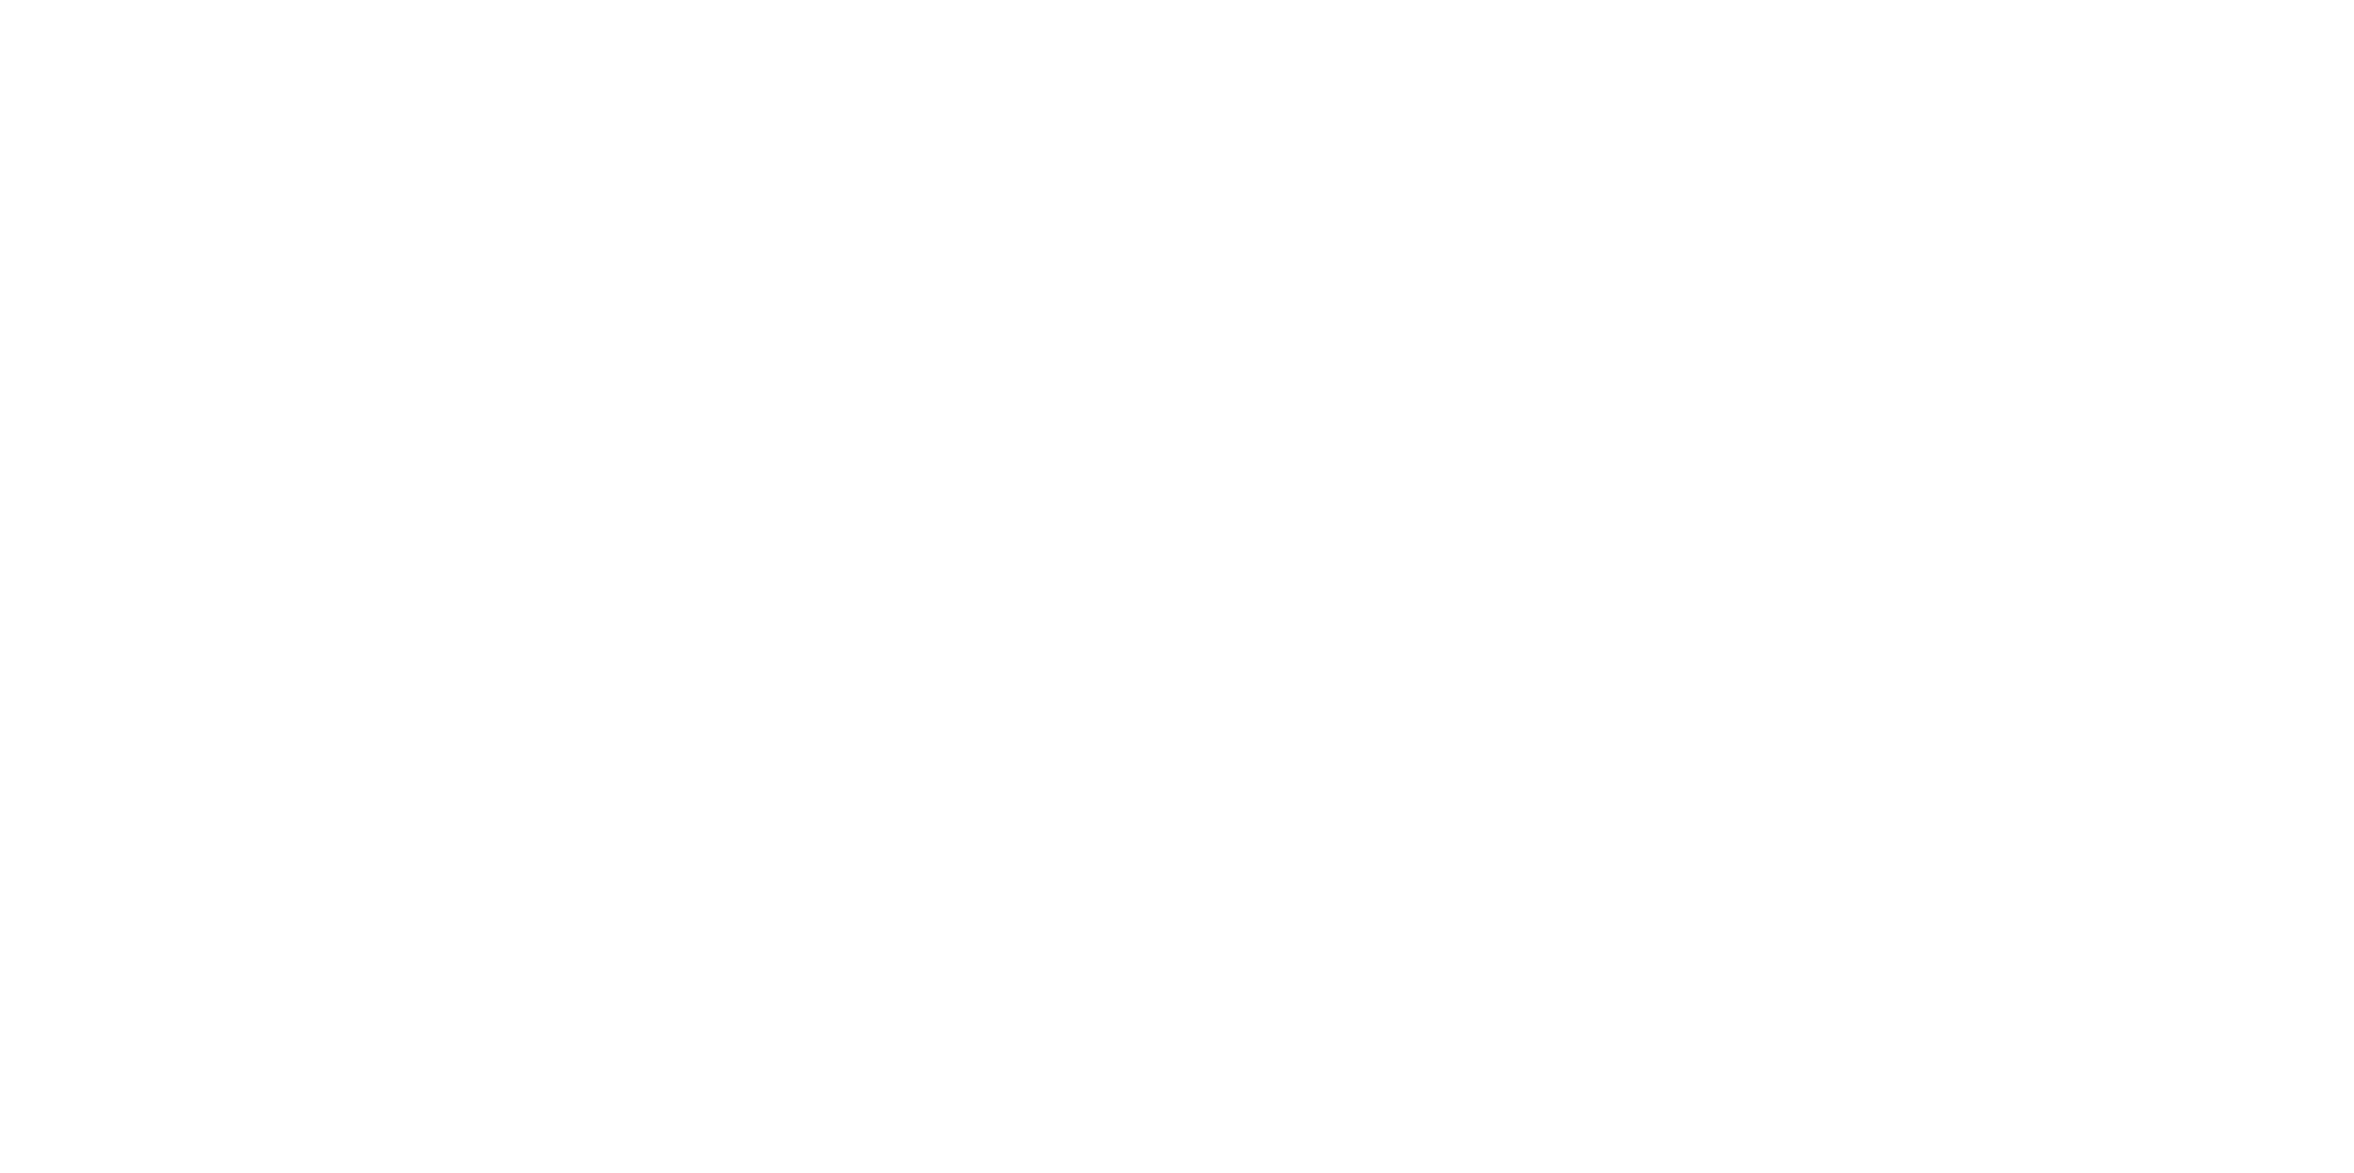 Craig's Workshop Logo